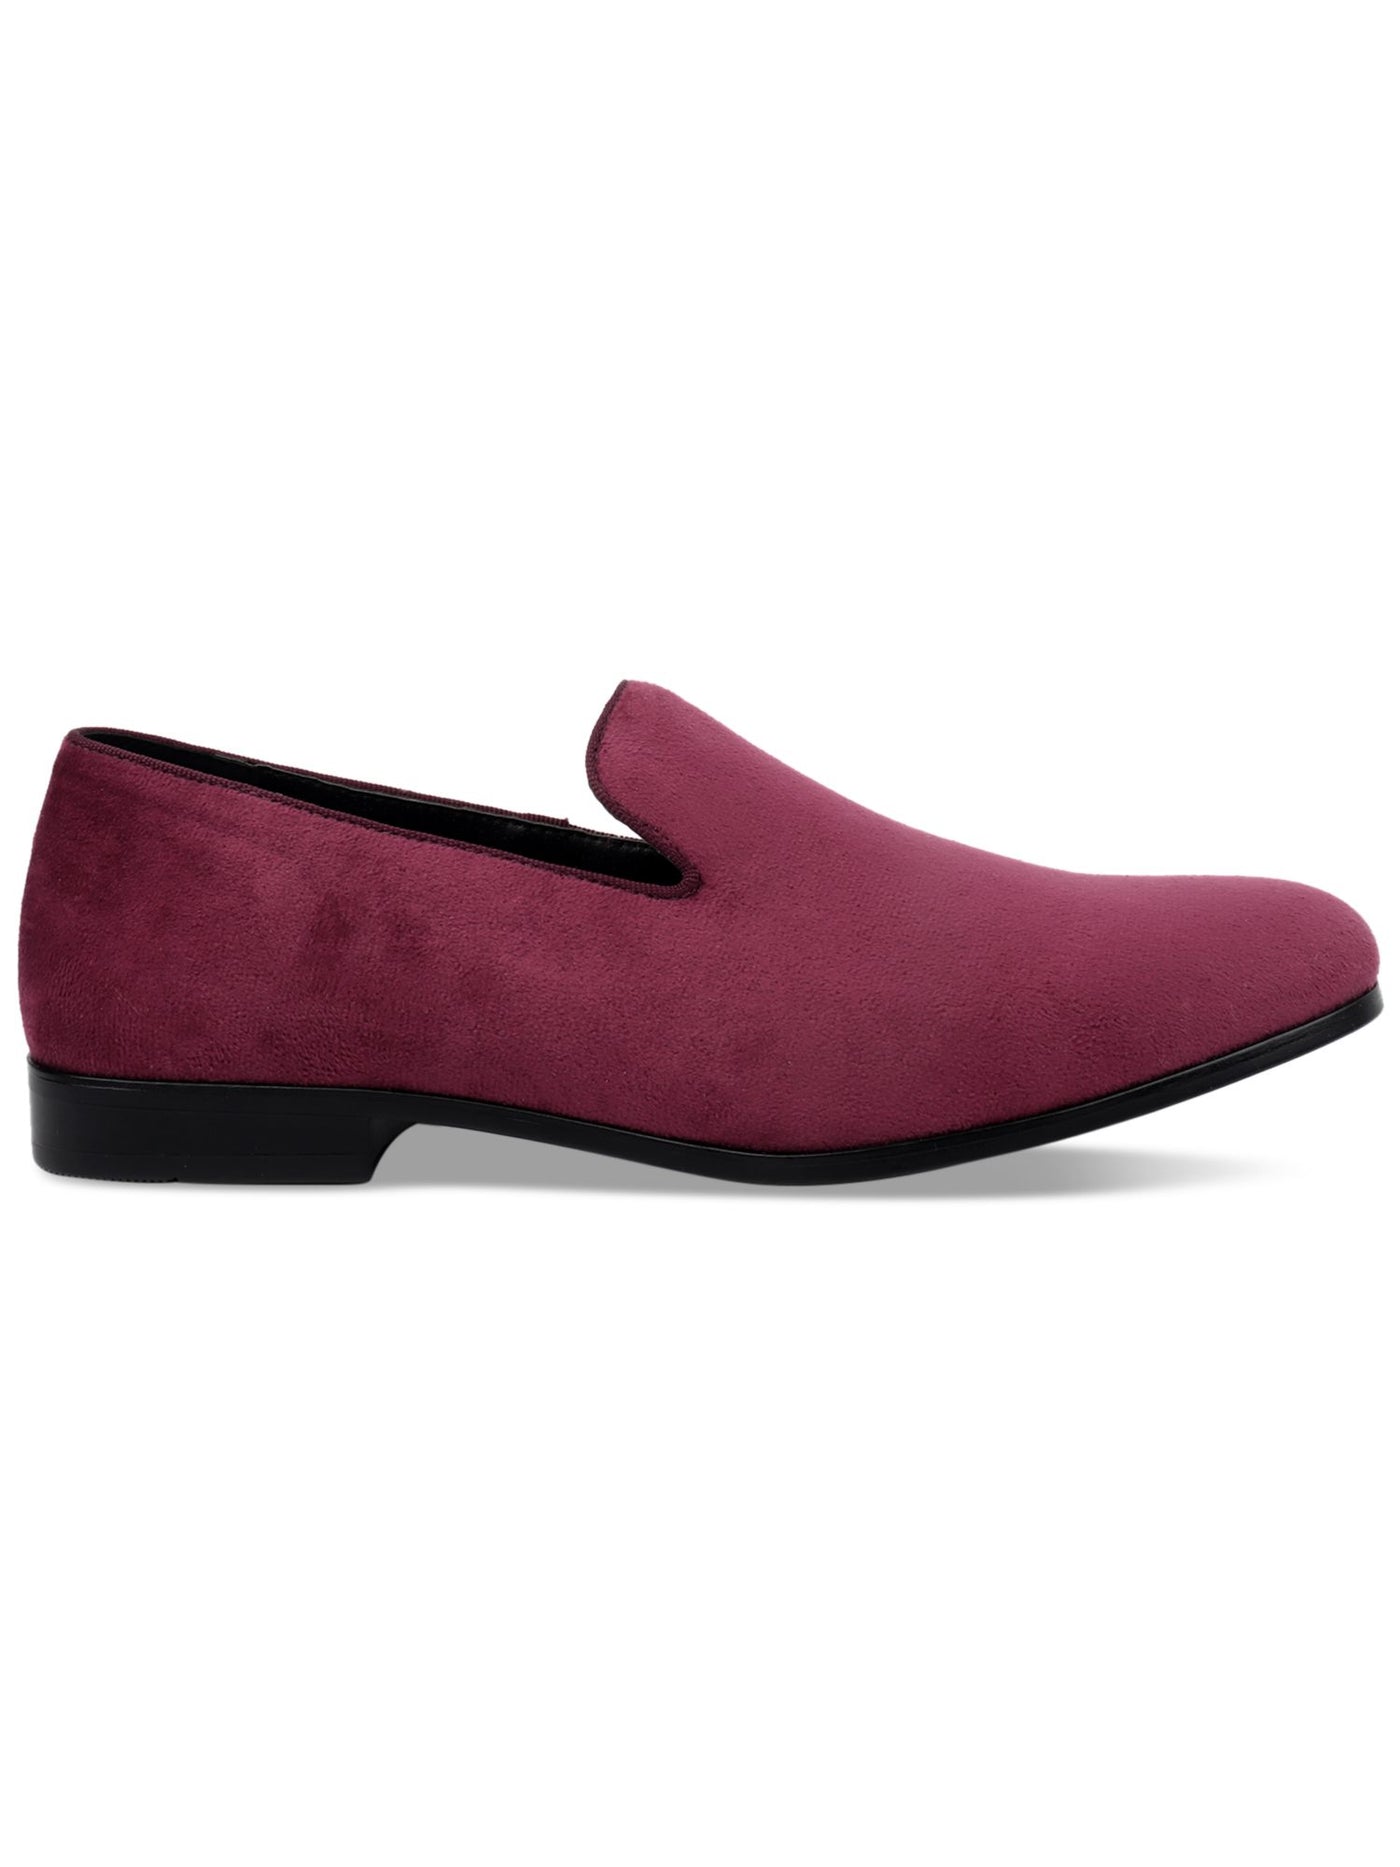 ALFANI Mens Burgundy Padded Zion Round Toe Slip On Loafers Shoes 9 M